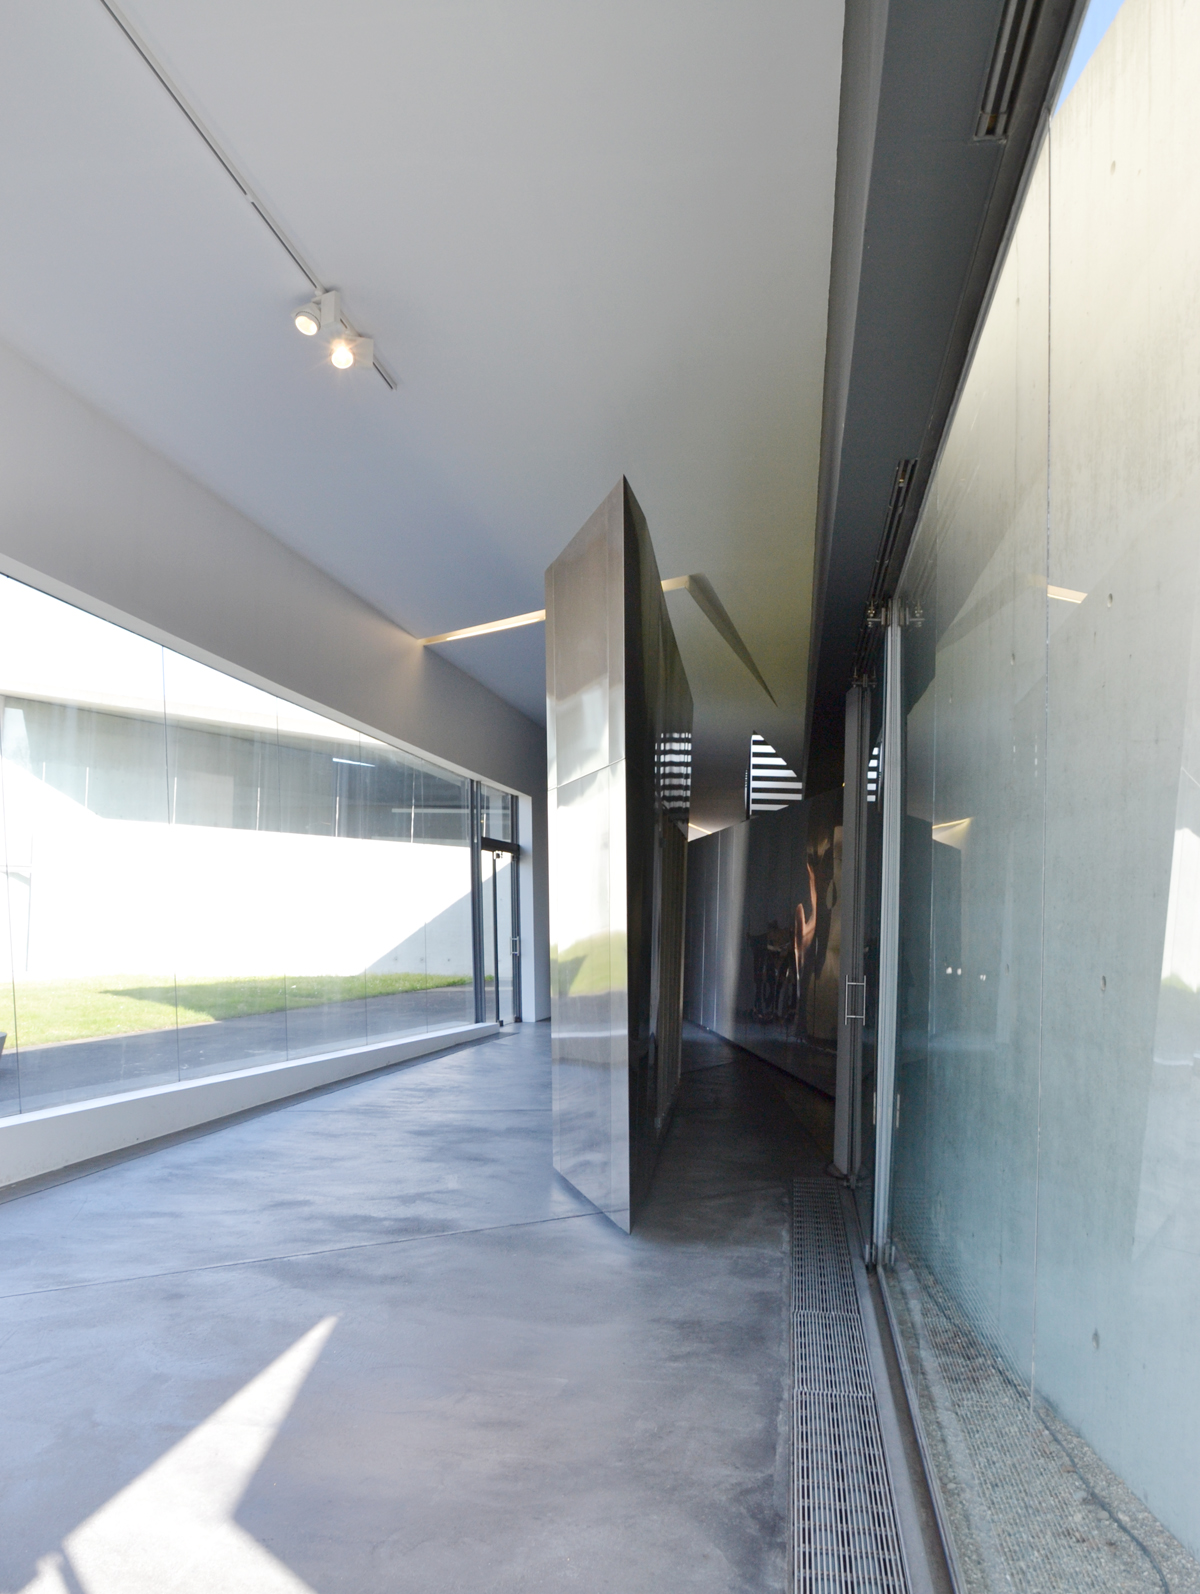 Zaha Hadid architecture Fire Station at Vitra Campus. The interior